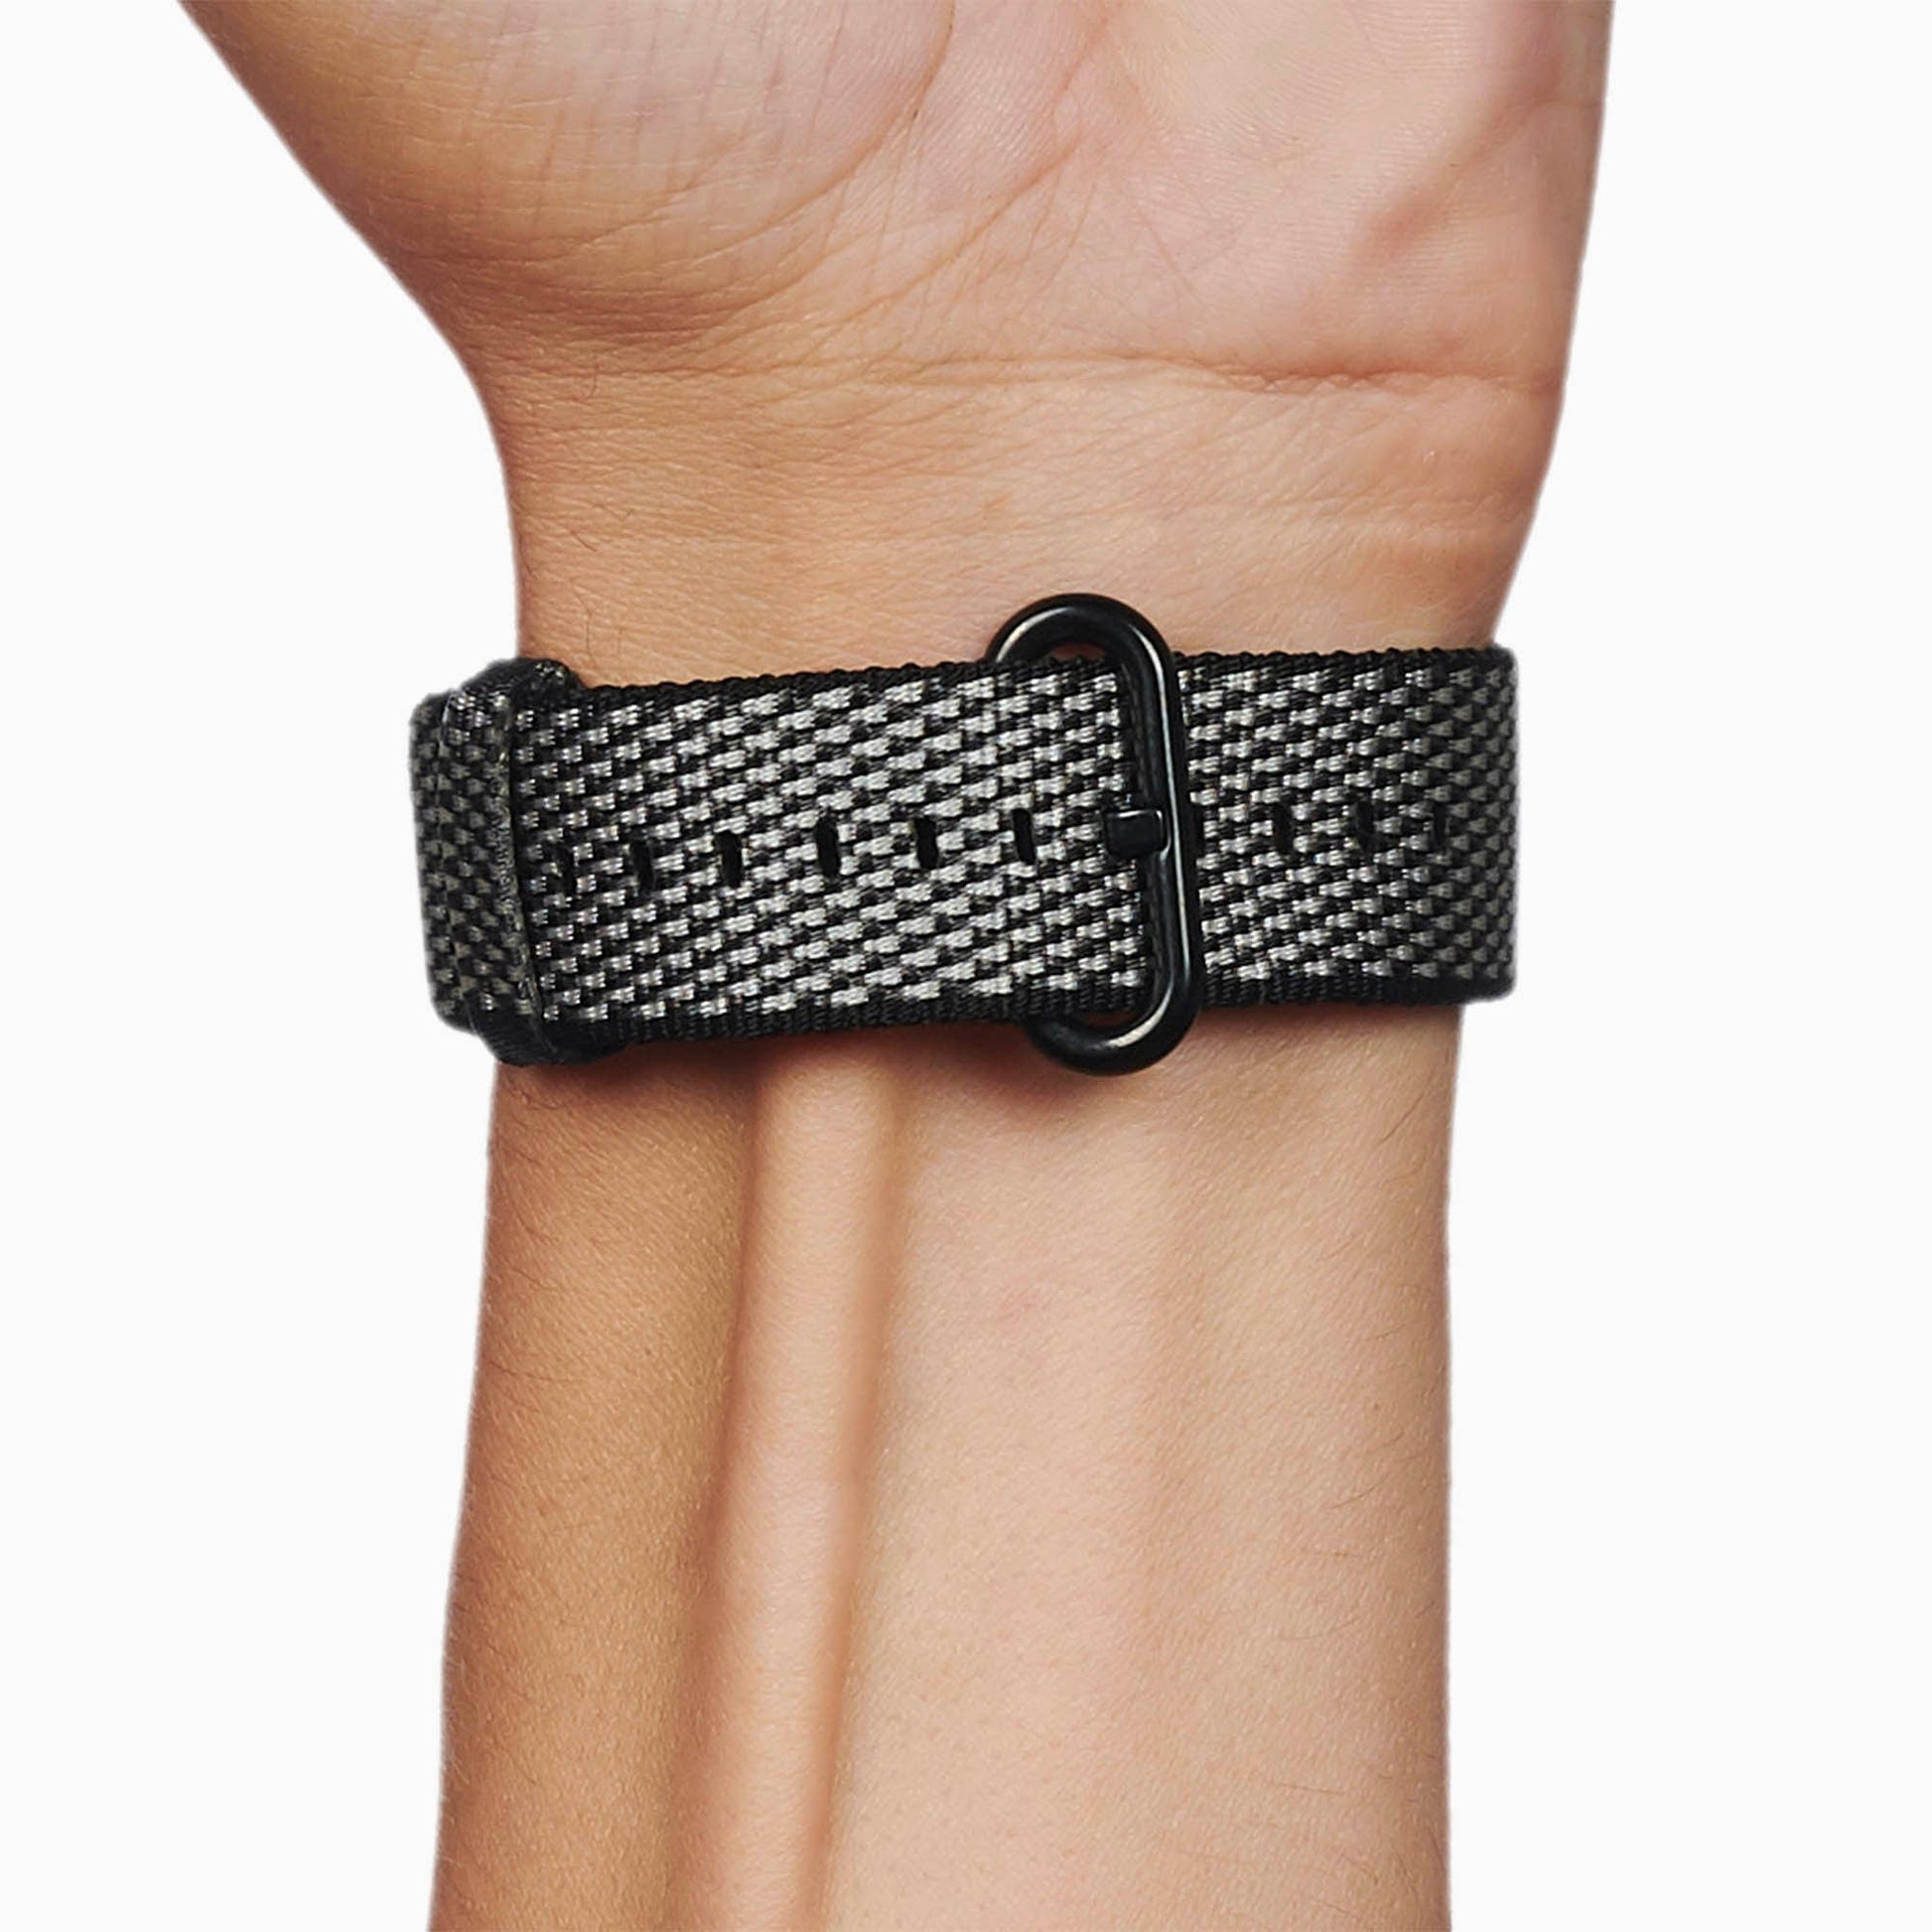 Black Check Woven Nylon for Apple Watch